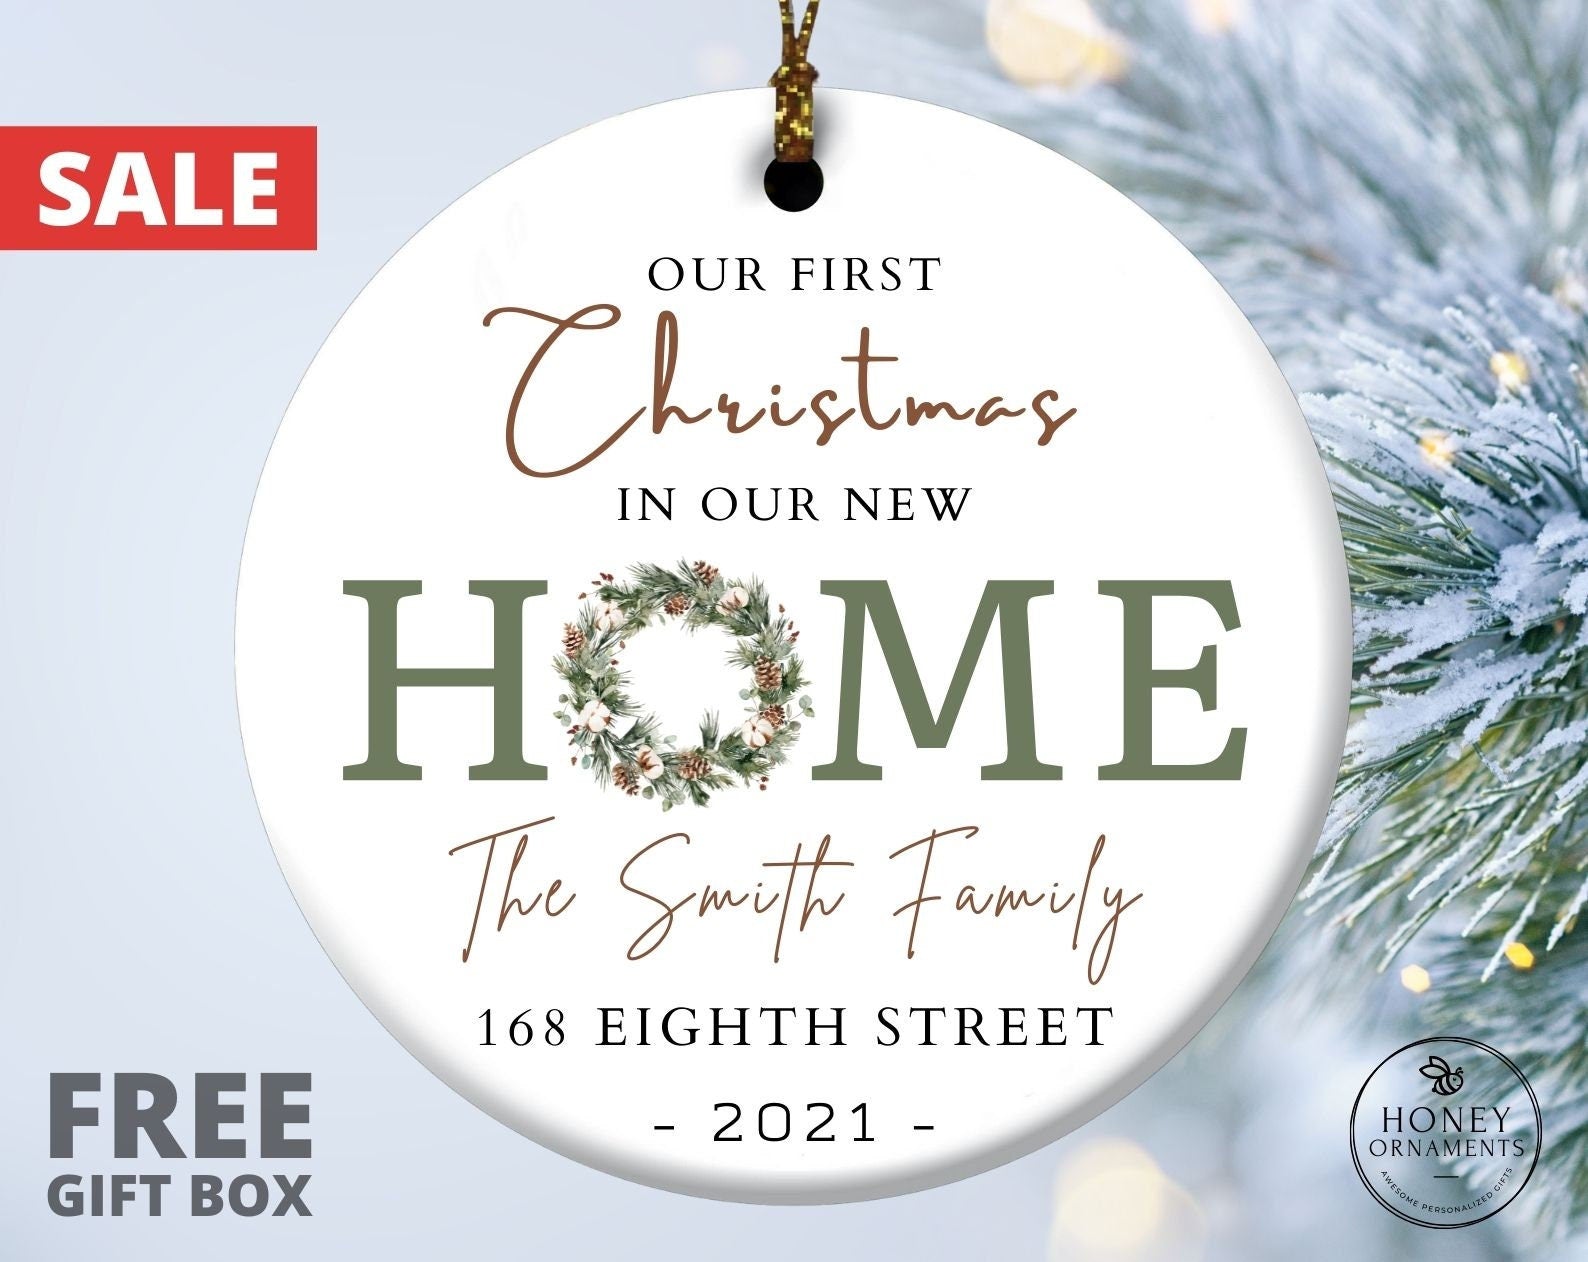 Christmas Open House at BACI Gifts | Downtown Brampton BIA